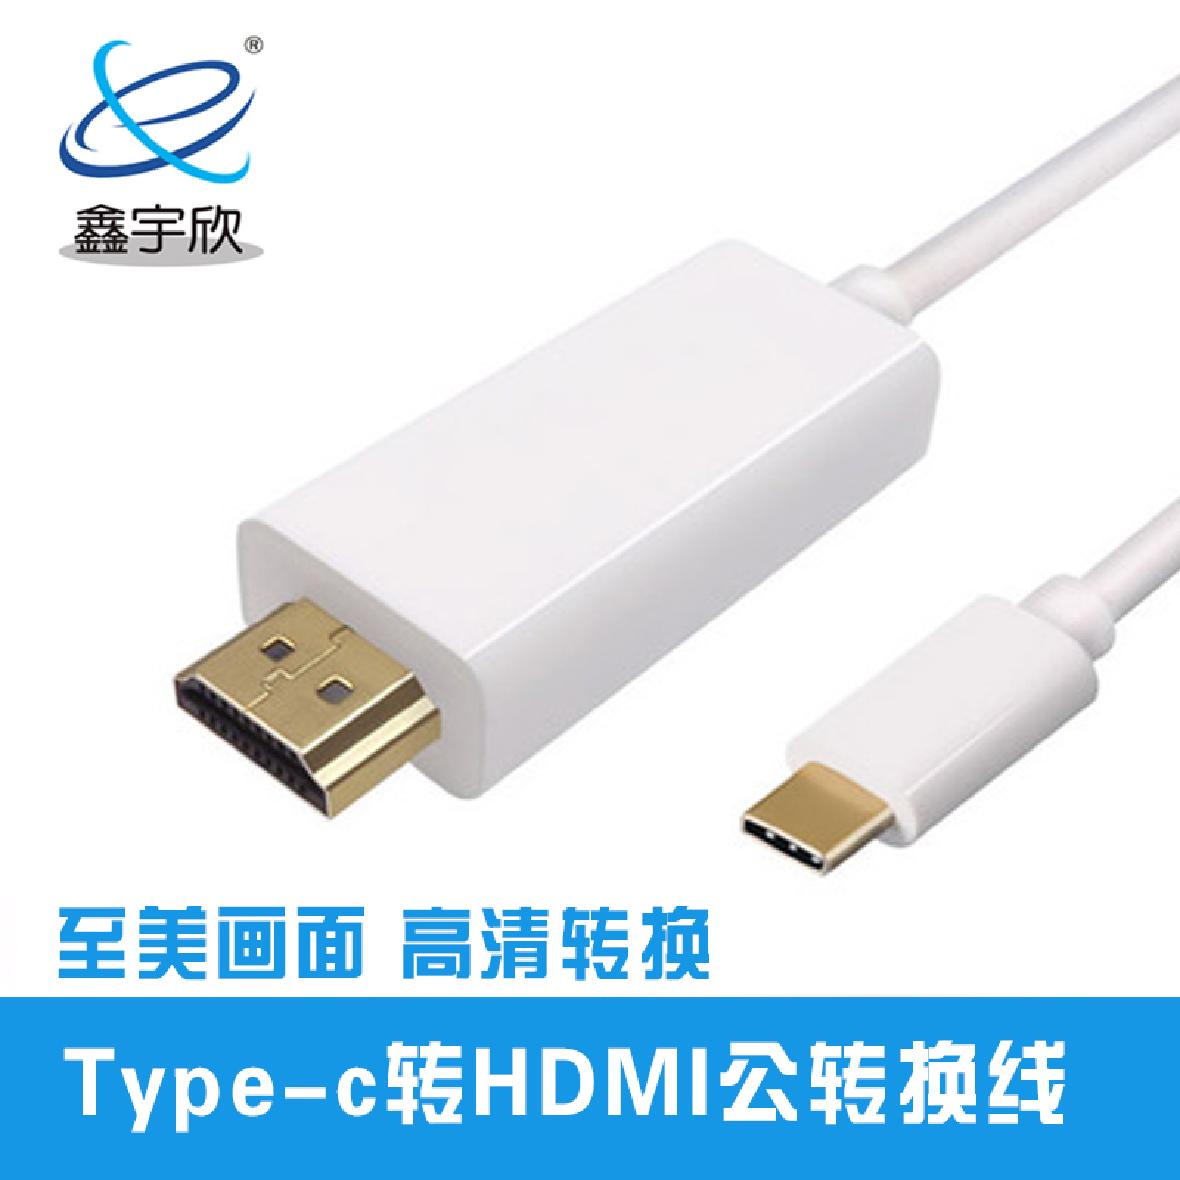  type-c转hdmi高清连接线 USB3.1 TYPE-C公对HDMI公转换线 1080P高清信号